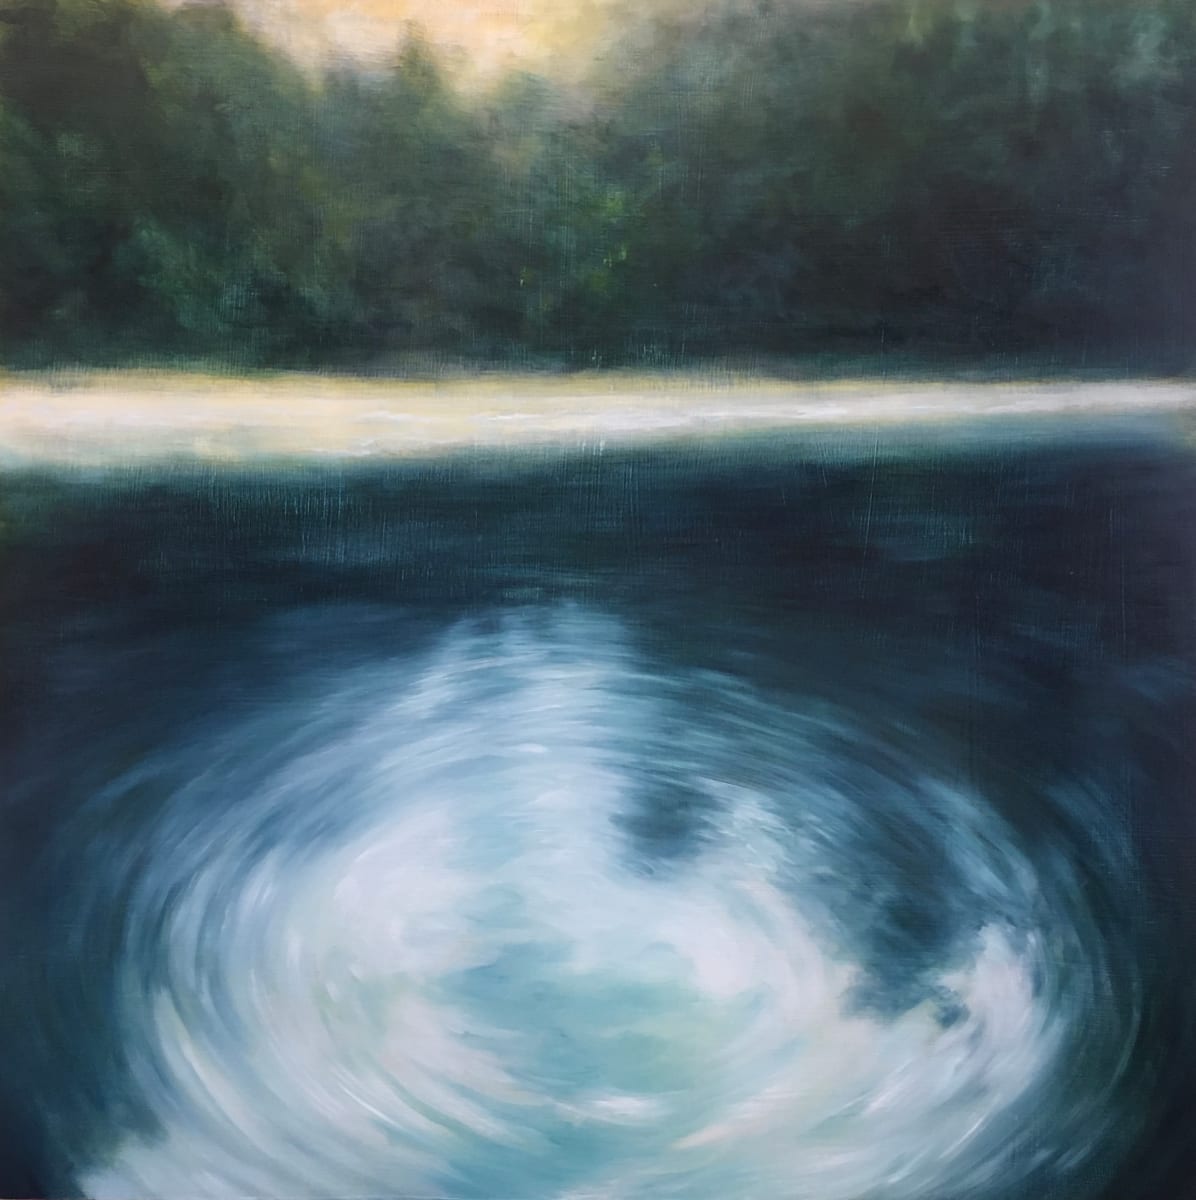 Beaver Creek (Ripple)  Image: Beaver Creek (Ripple)
Oil on canvas
30x30"
sold